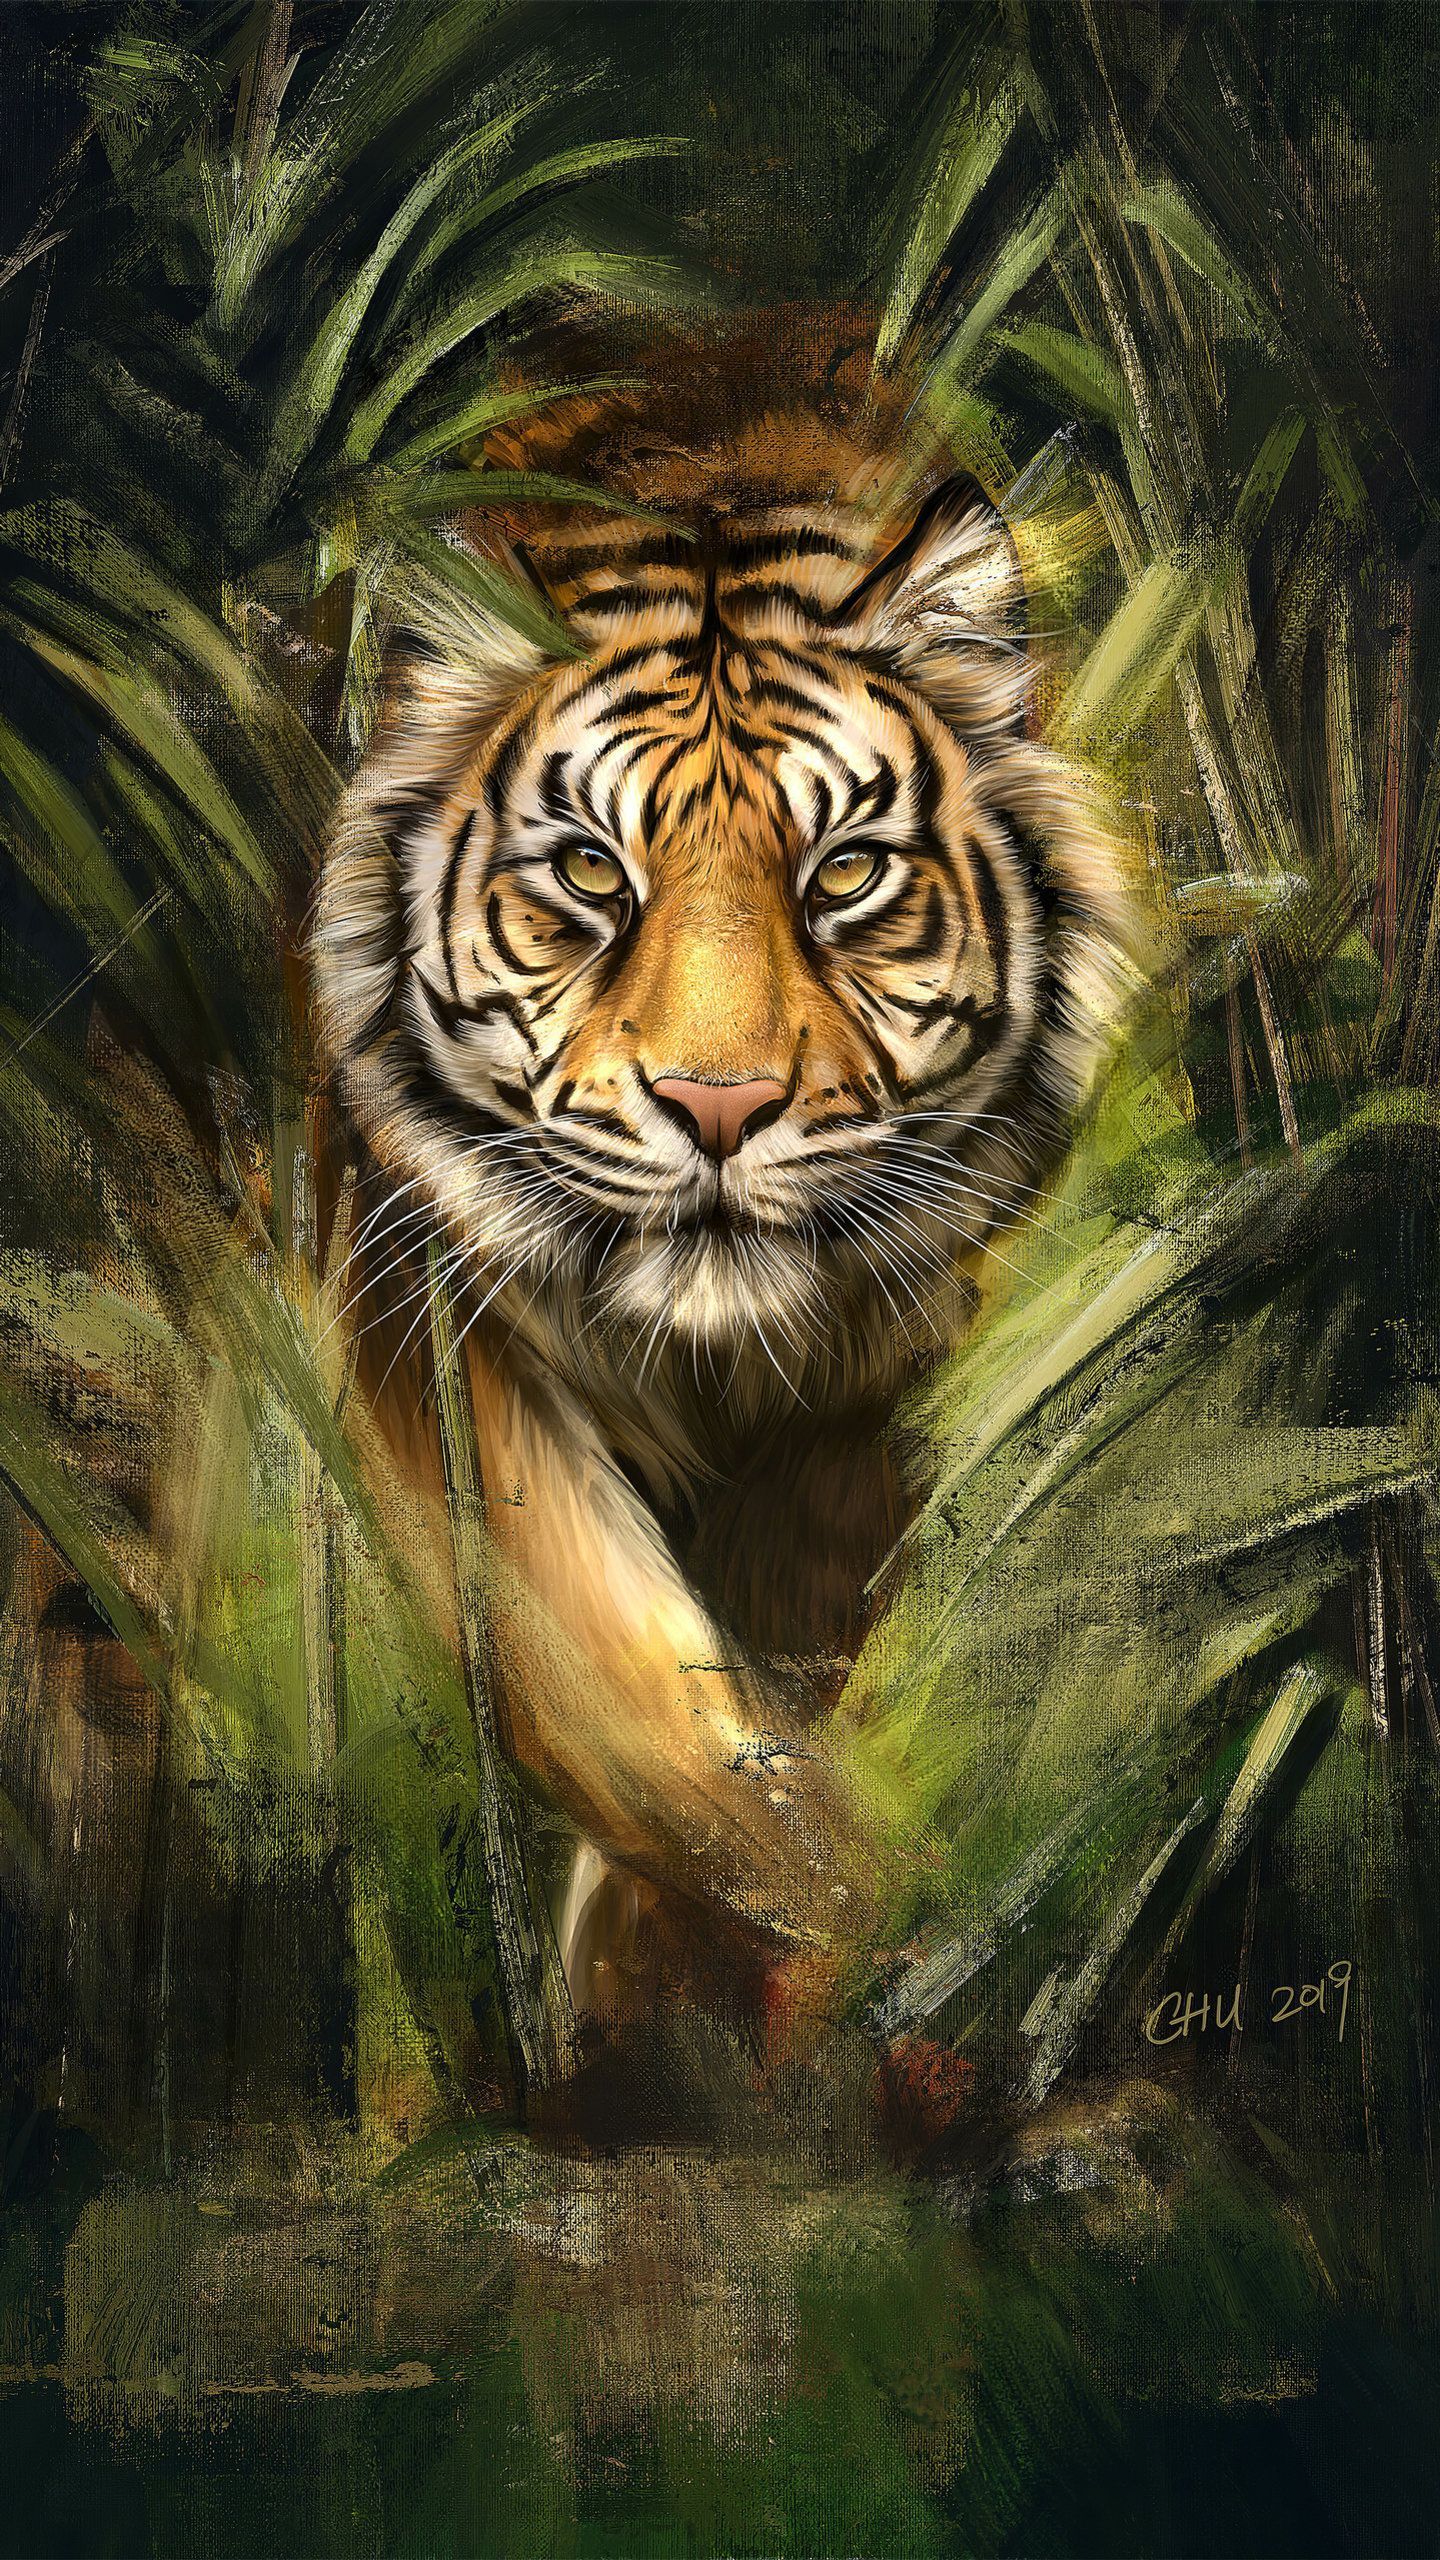 Tiger Painting Art, HD Animals .br.com